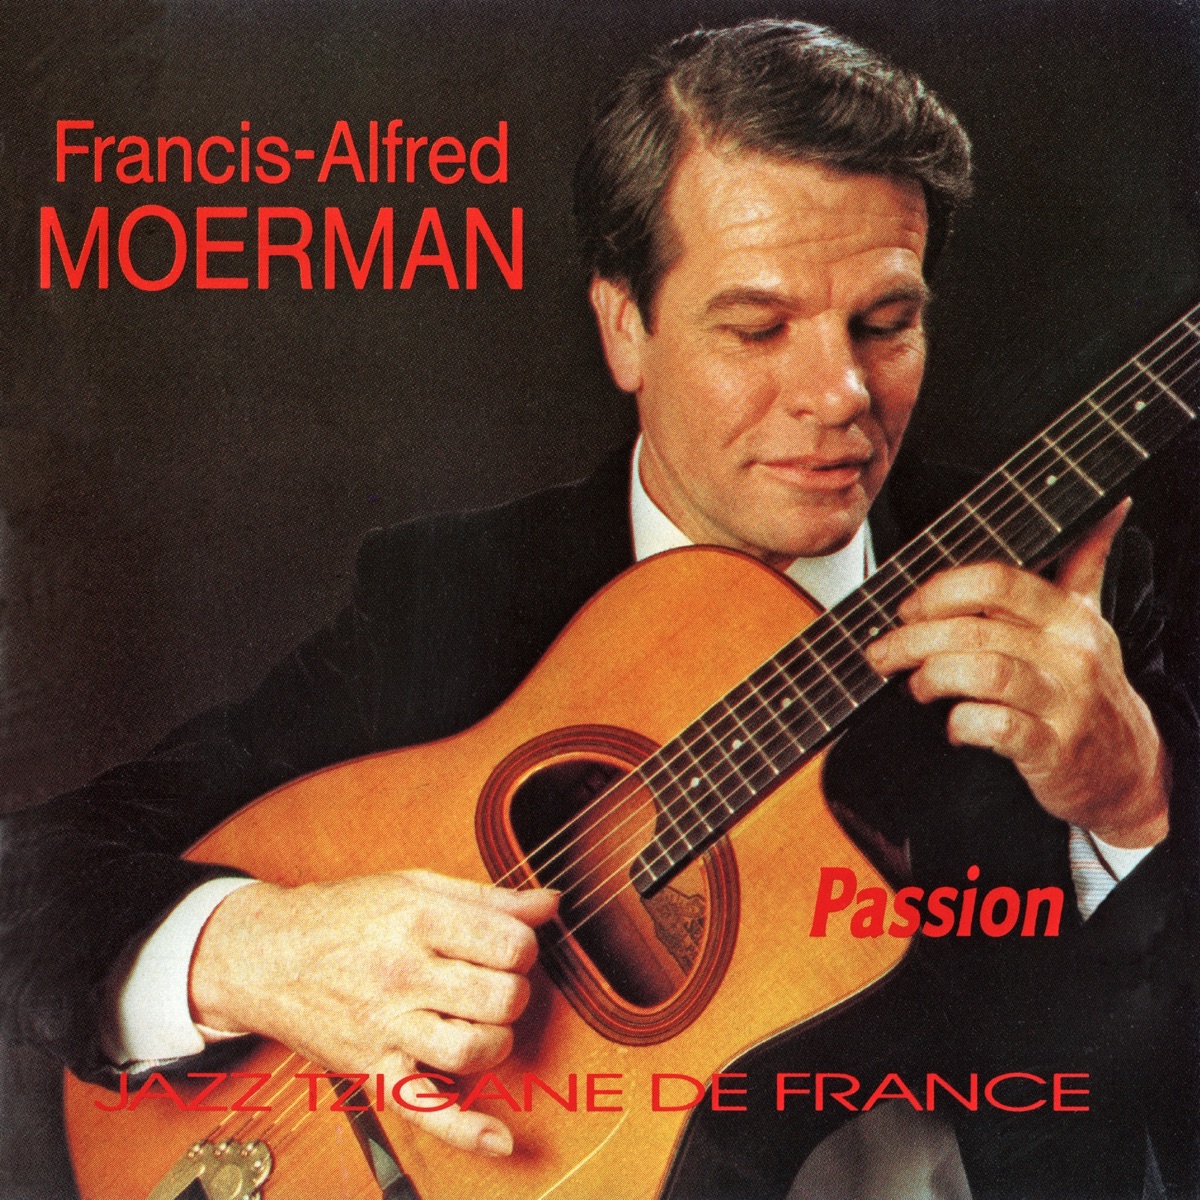 L'Infini Voyage - Album by Francis alfred moerman - Apple Music